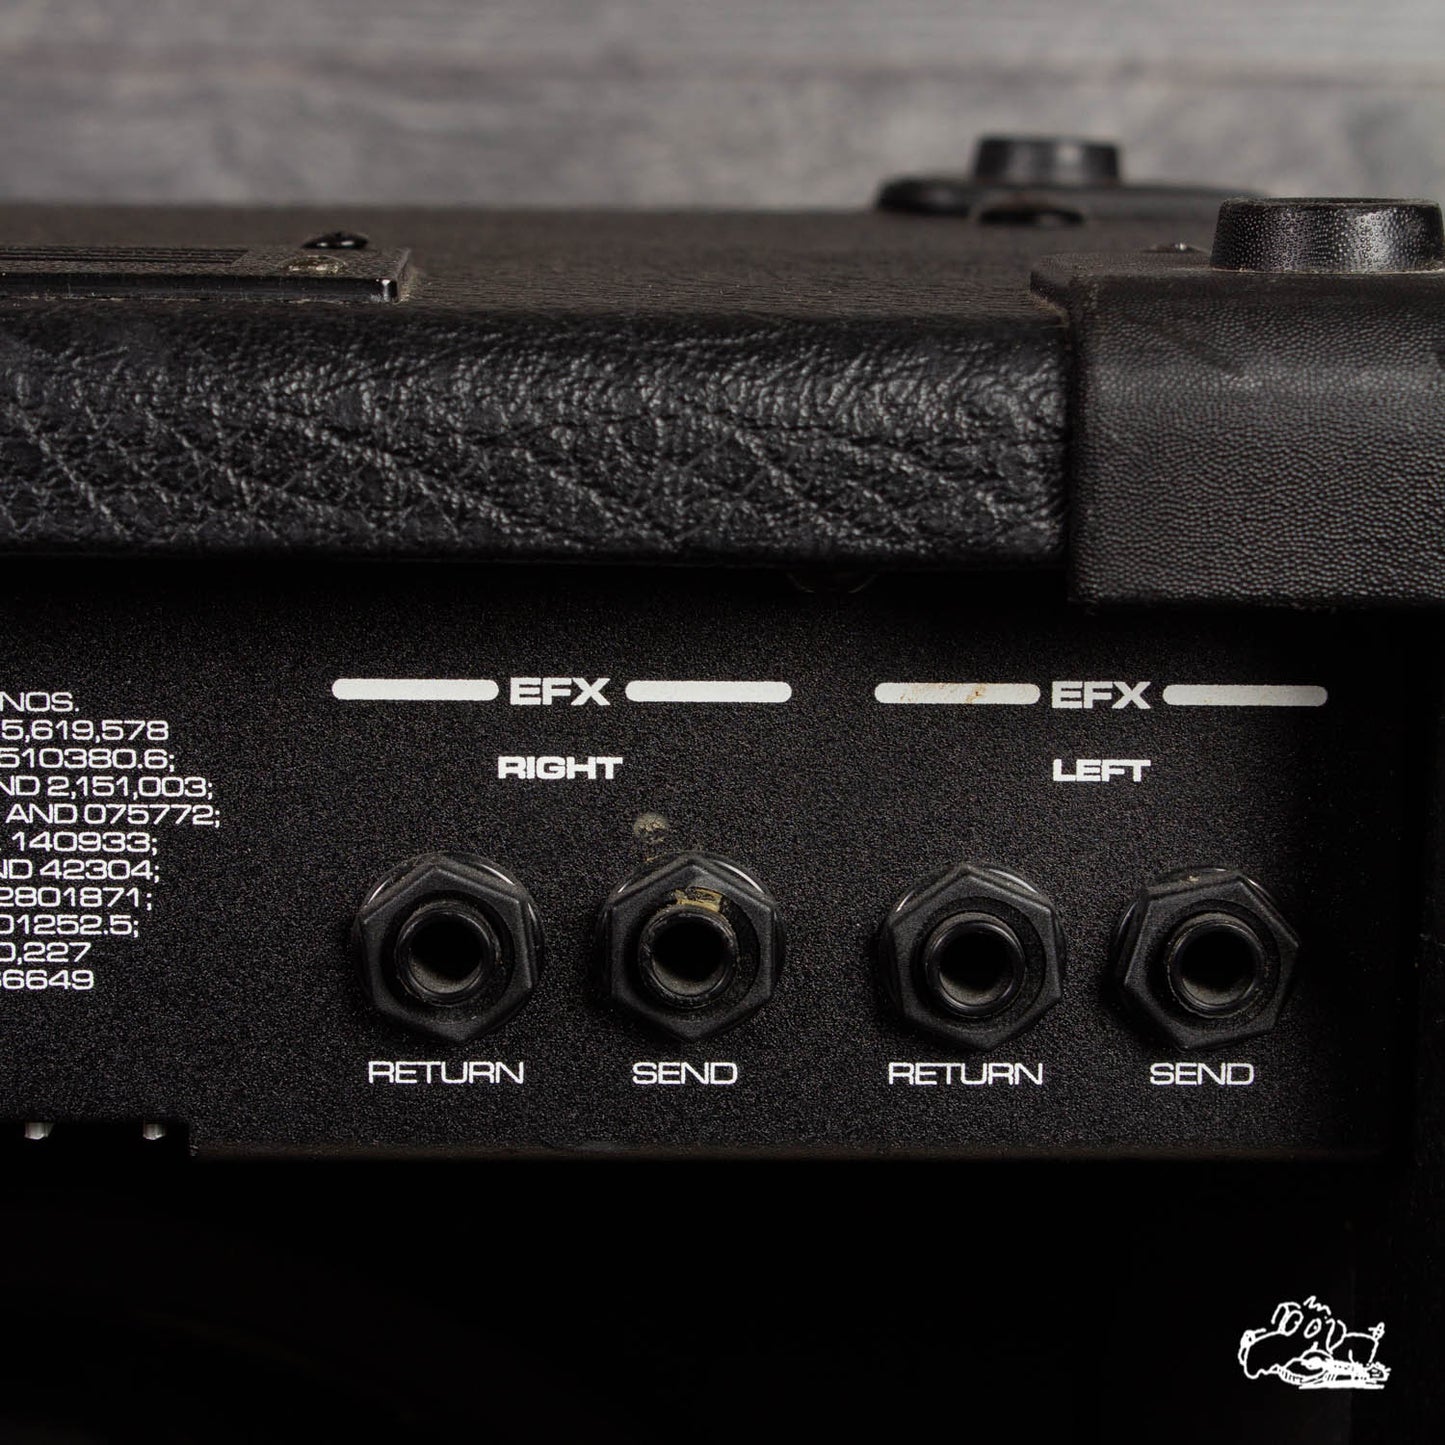 Peavey Transformer 212 Guitar Combo Amplifier